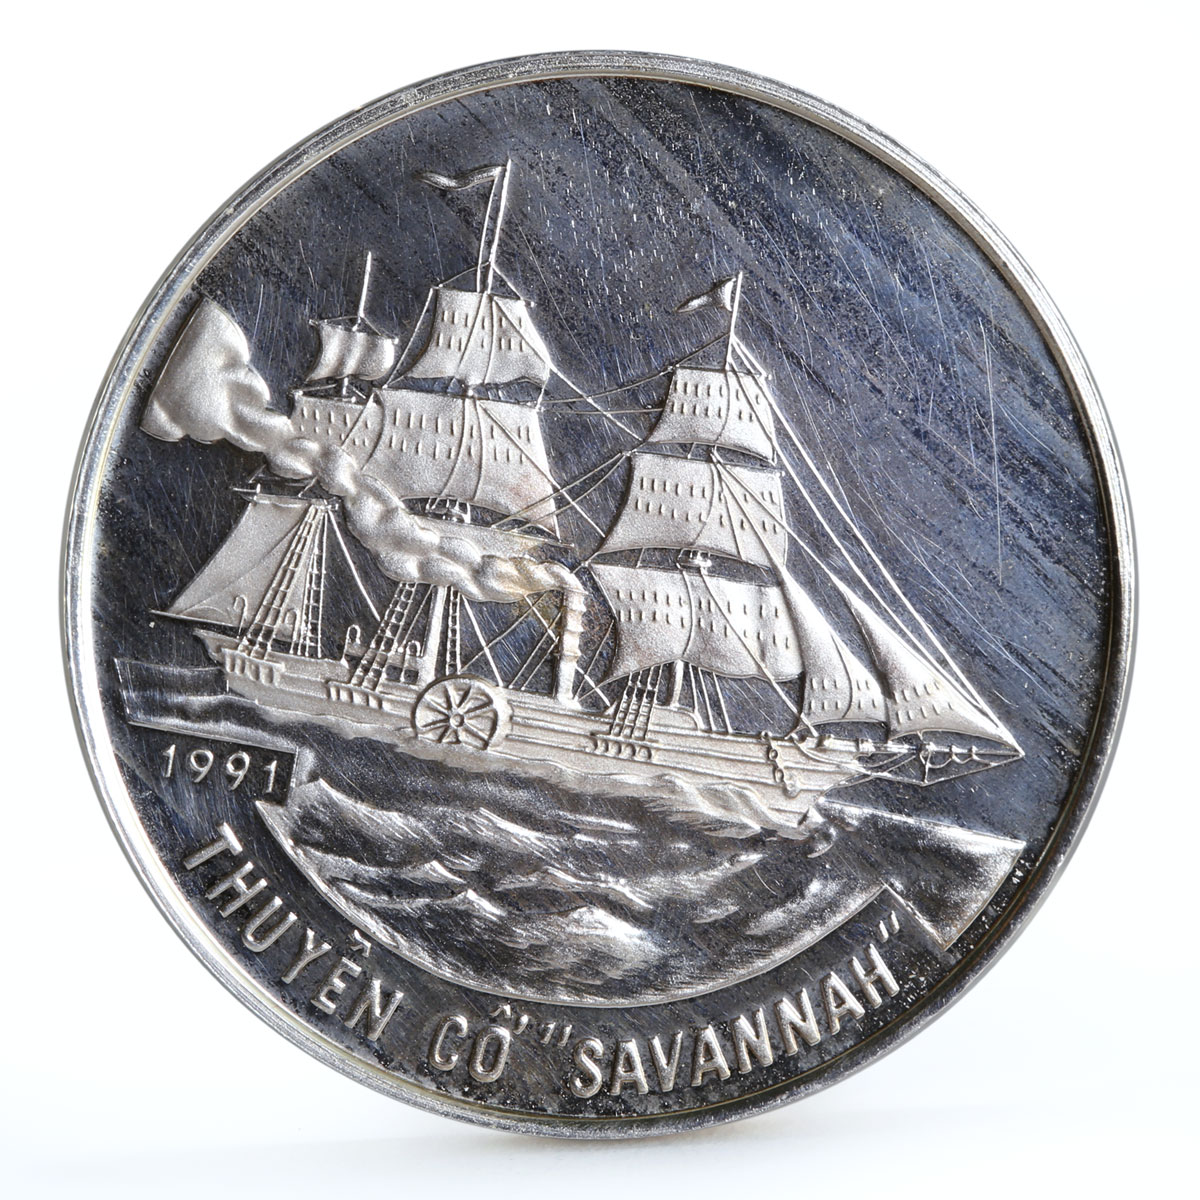 Vietnam 100 dong Boats of the World series Savannah Ship proof silver coin 1991